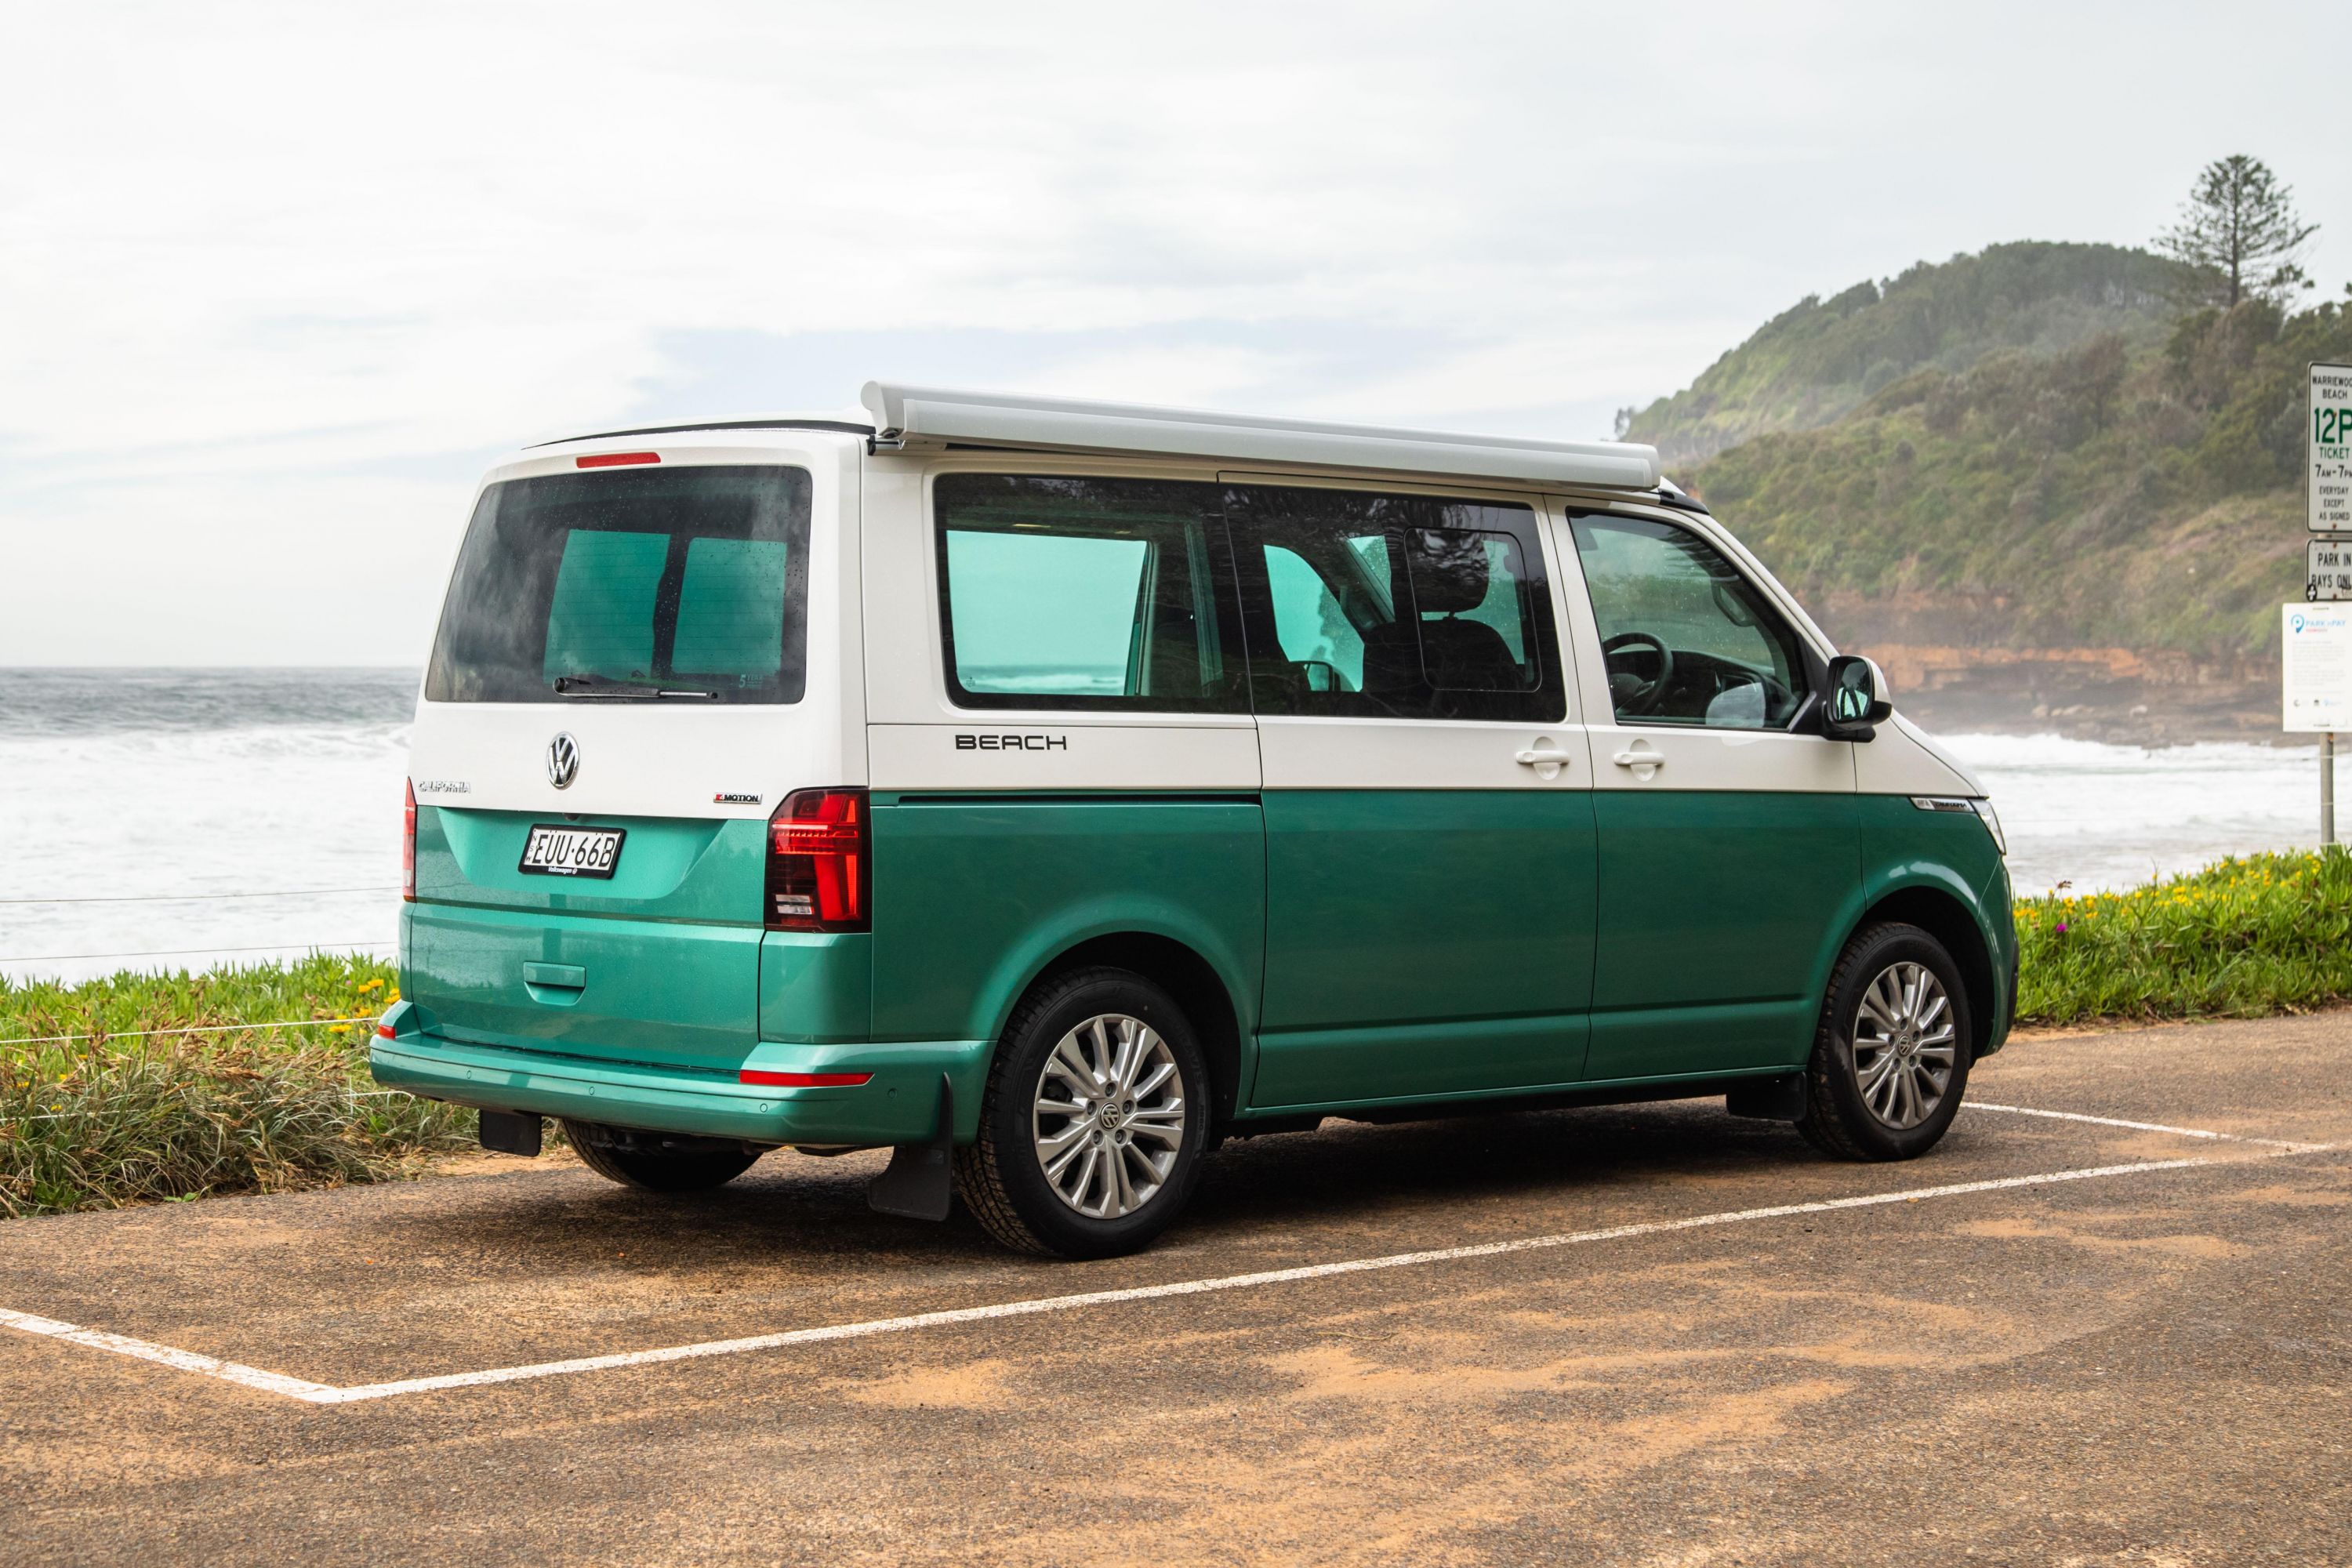 VW California Ocean campervan review: 'This van is amazing